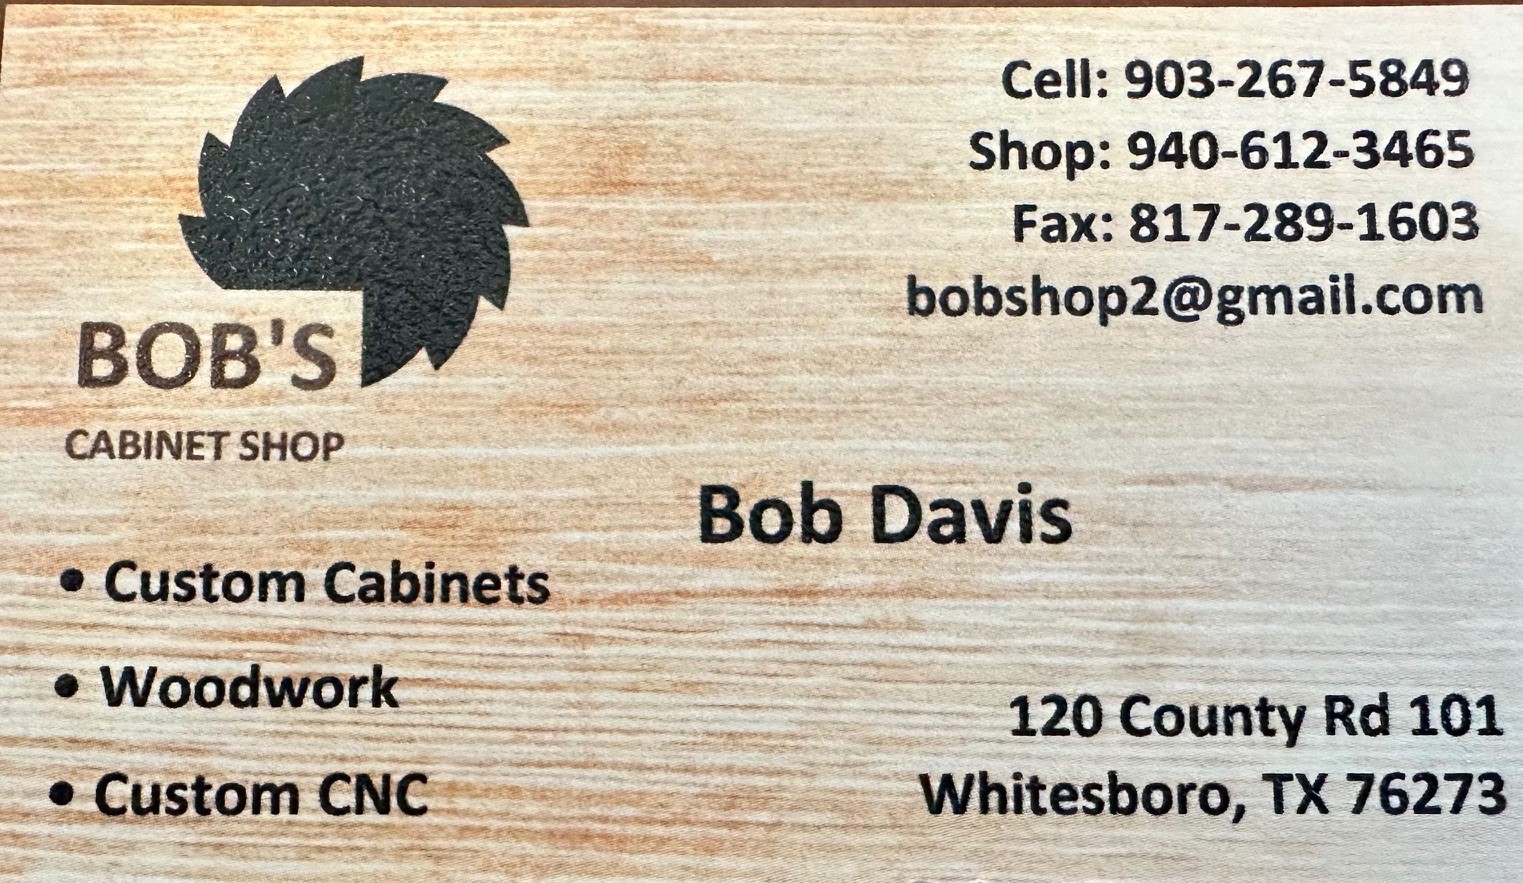 Bob’s Cabinet Shop